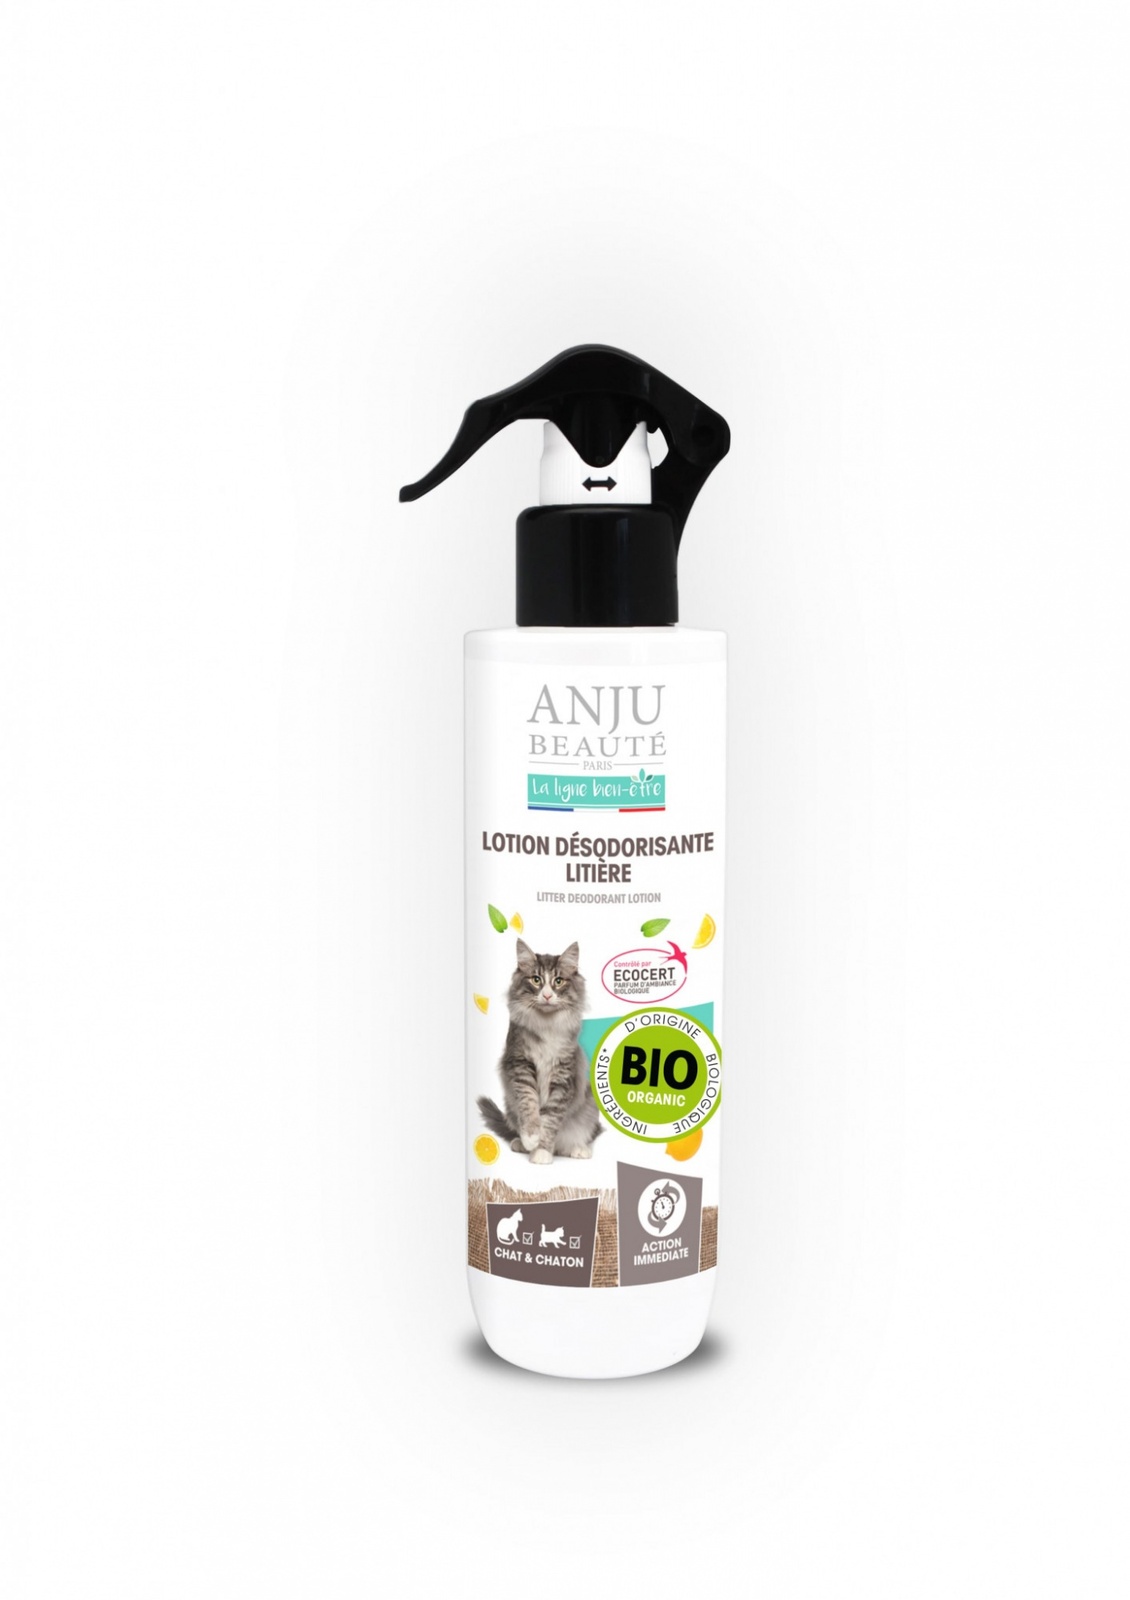 Anju Beaute дезодорирующий спрей для кошачьего туалета, 250 мл (285 г)